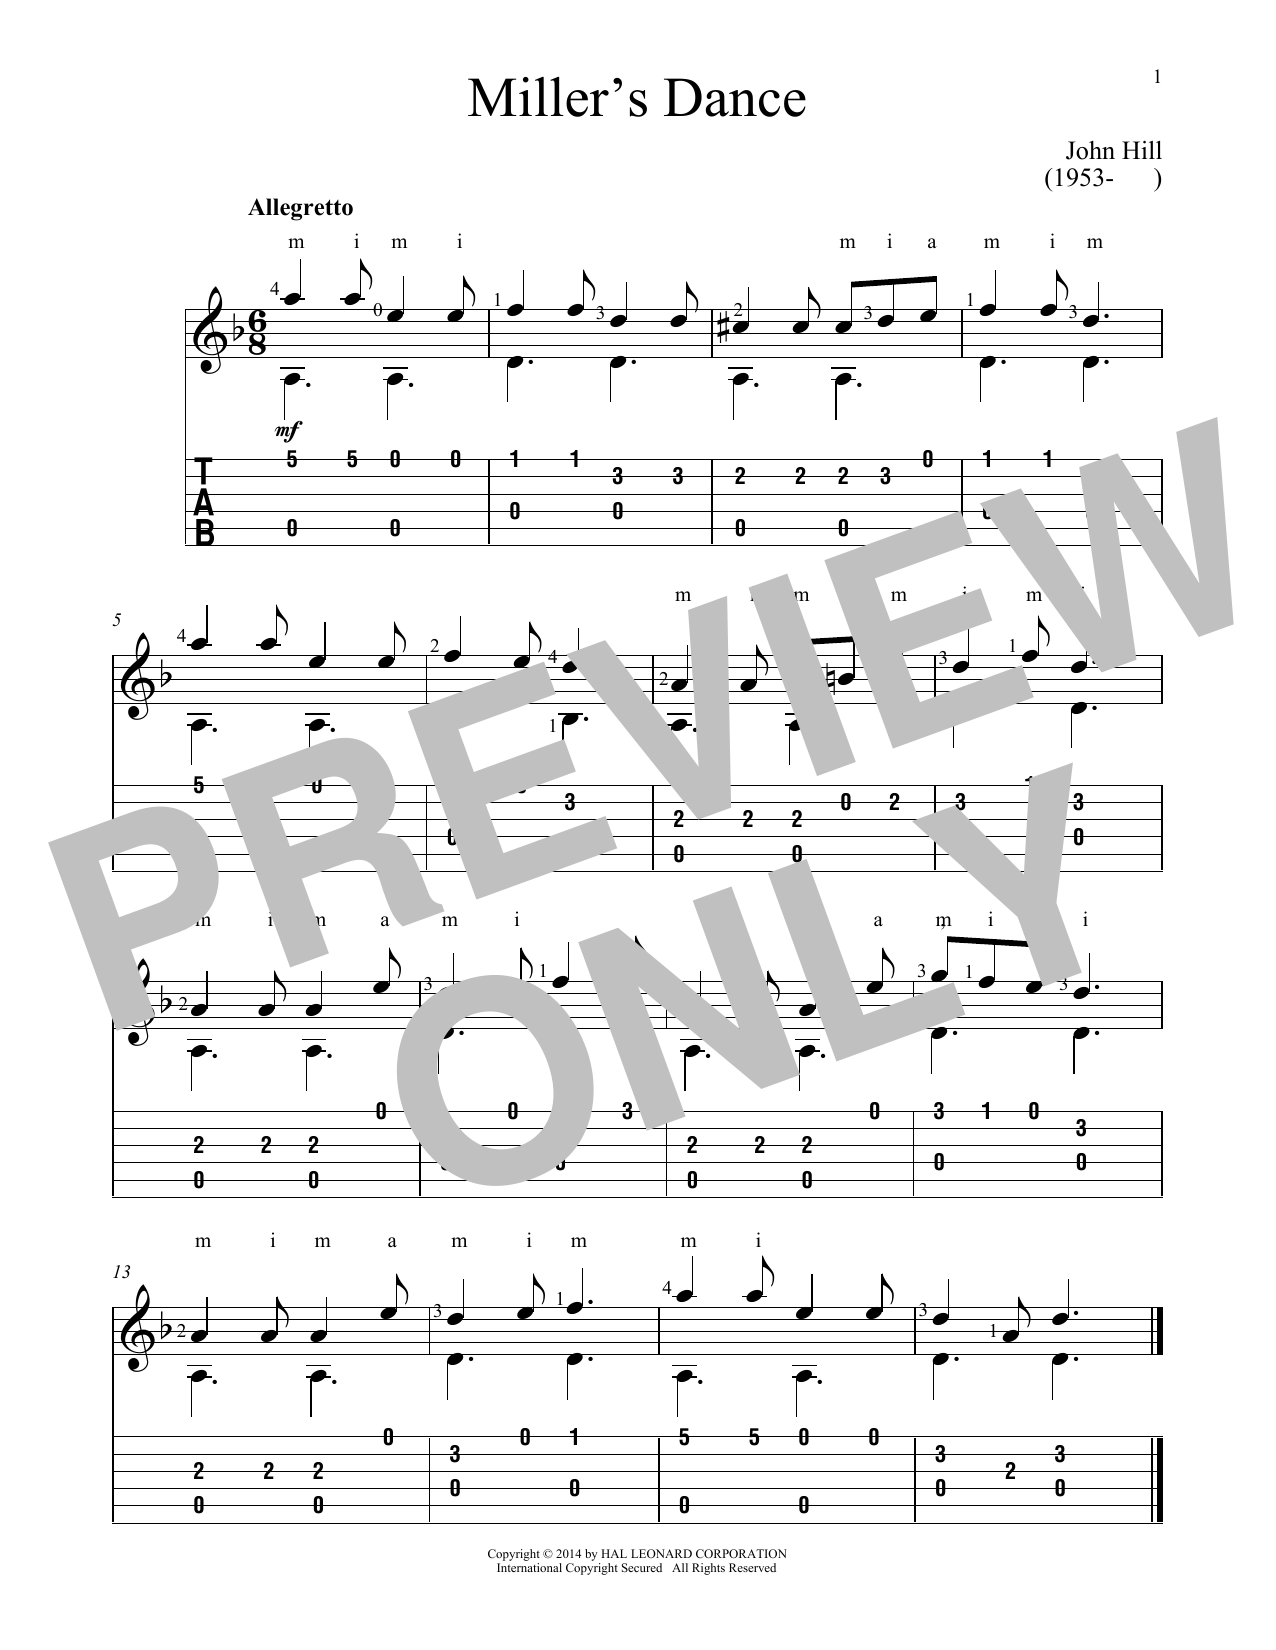 John Hill Miller's Dance Sheet Music Notes & Chords for Guitar Tab - Download or Print PDF